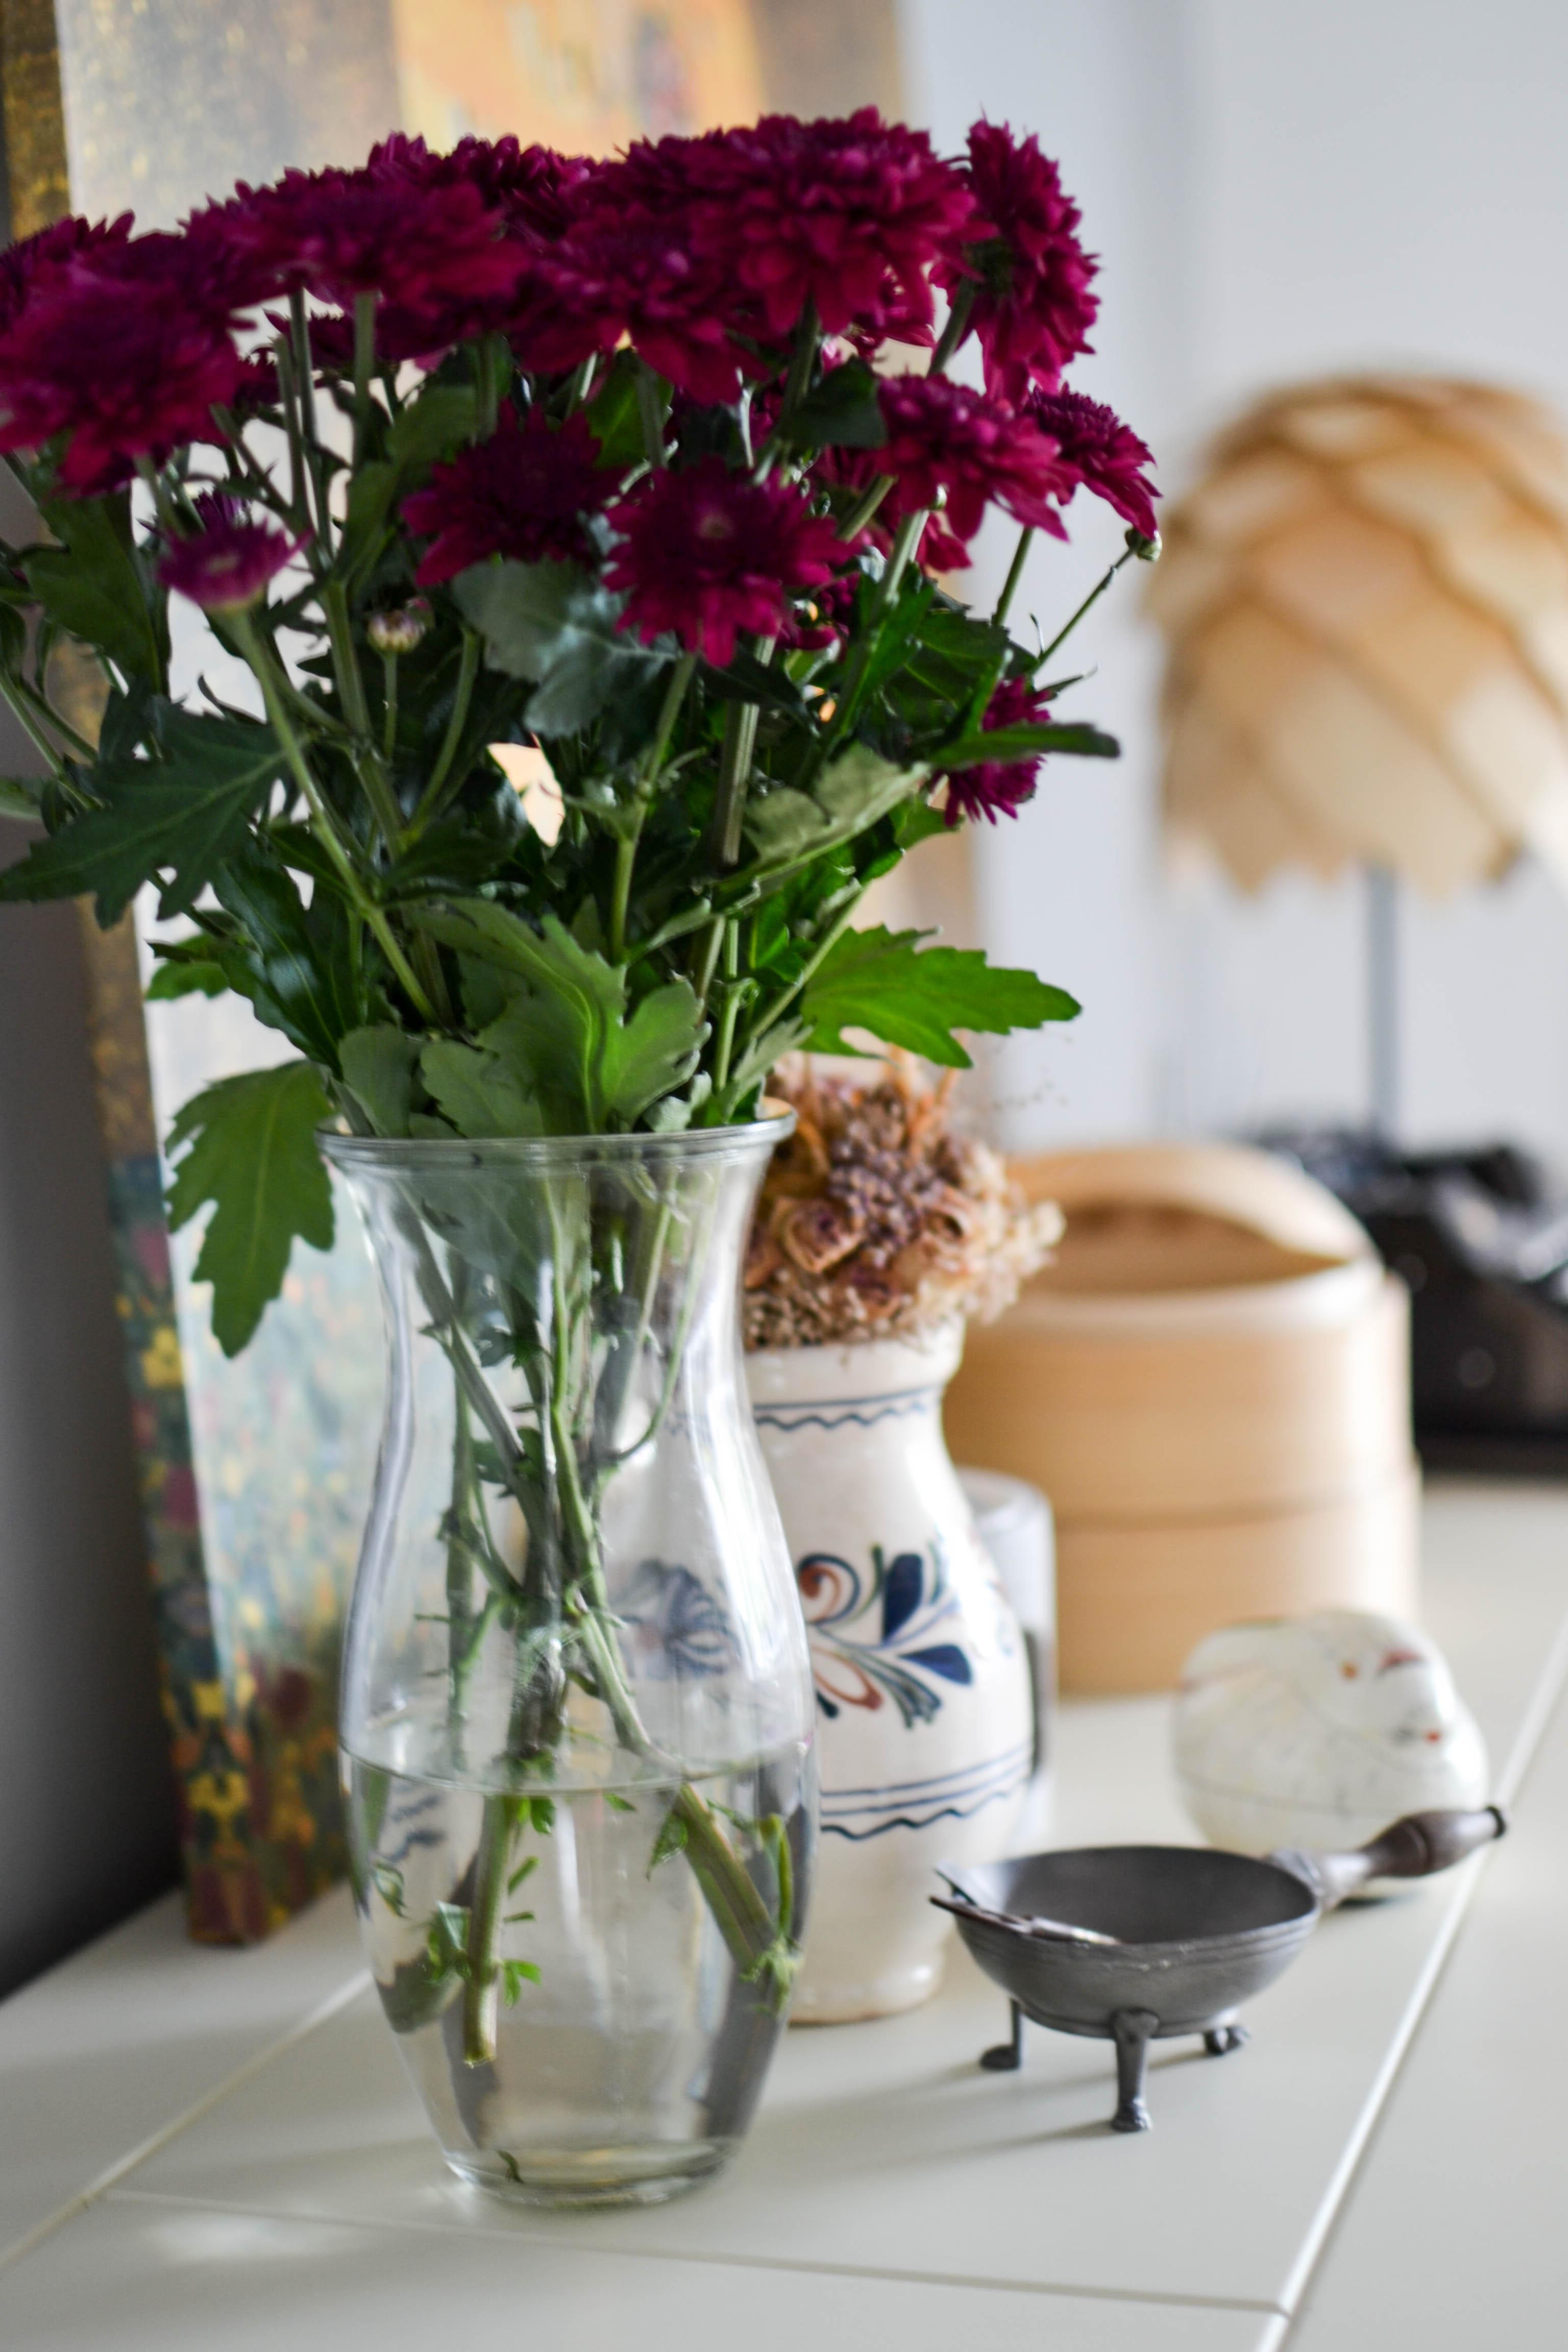 Chrysanthemen.
#flowers #autumn #decor #interior